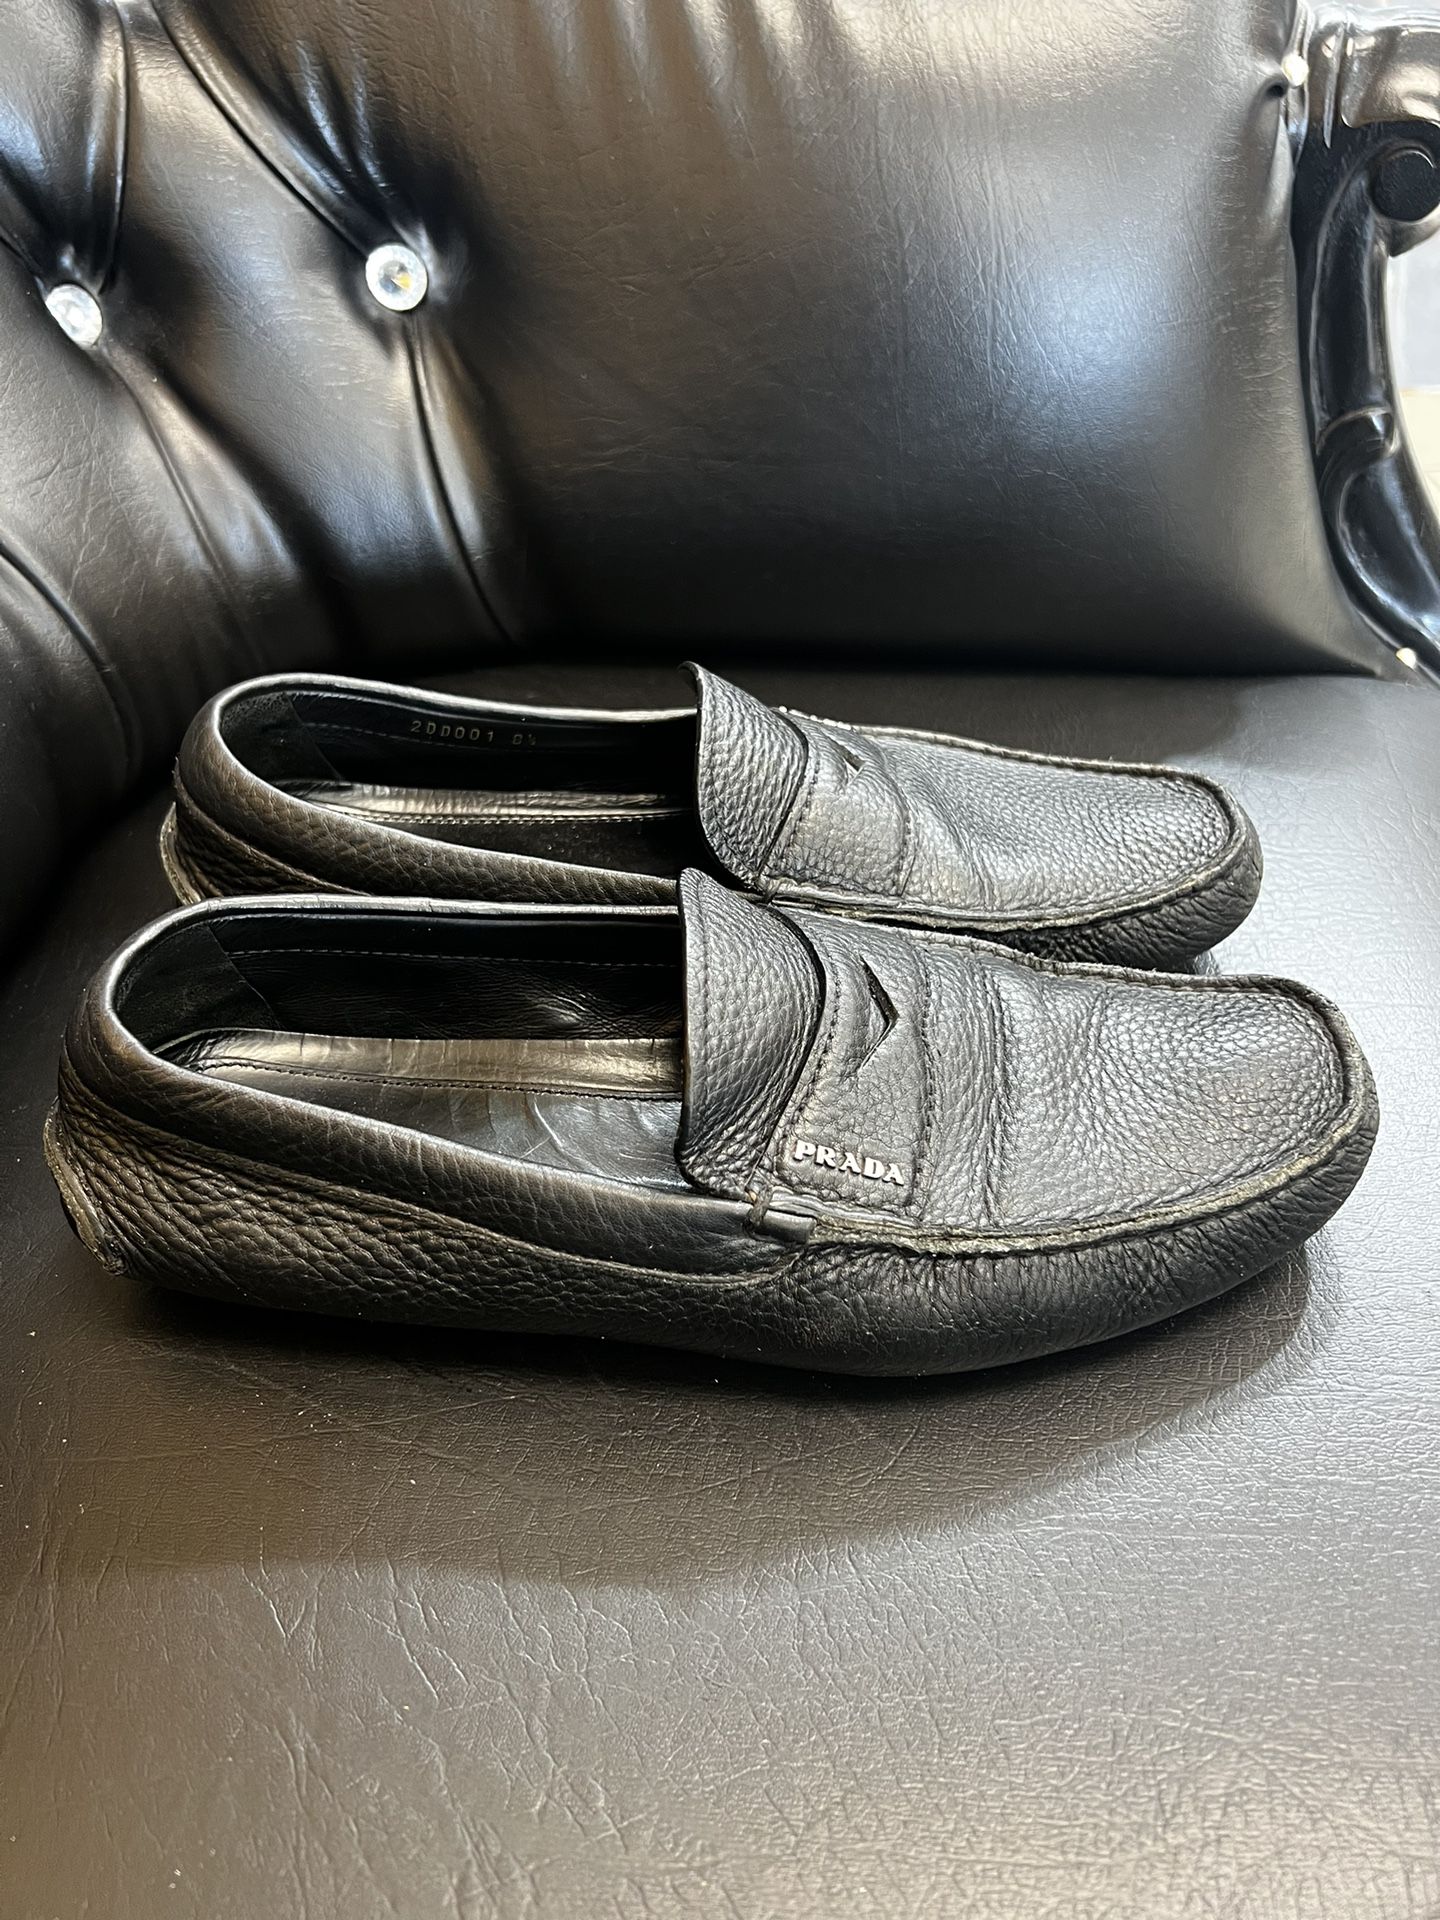 Prada Saffiano Leather Loafer Black Shoes size 8.5